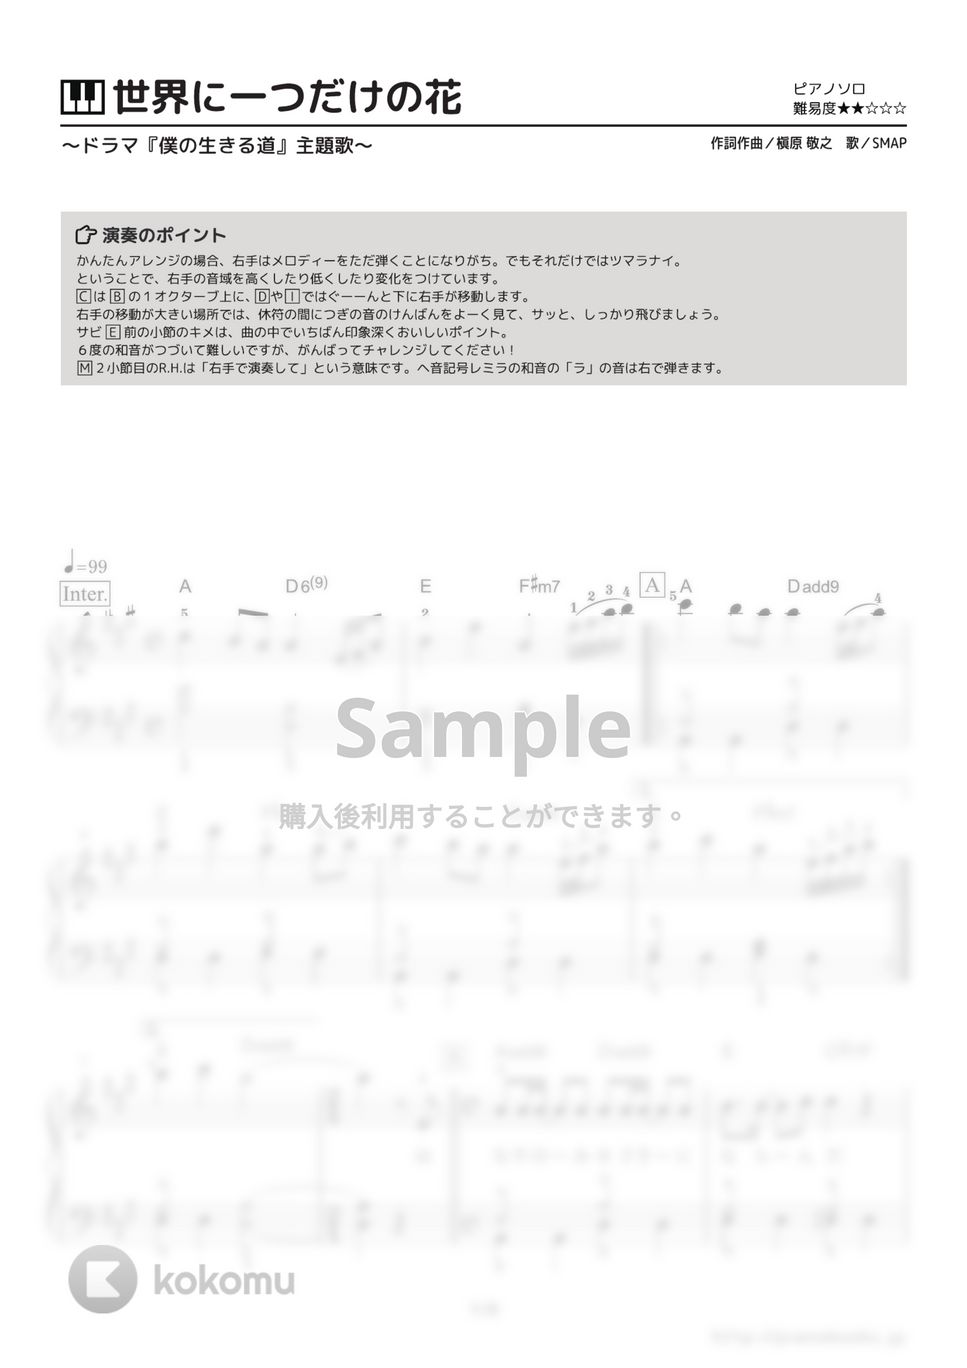 SMAP - 世界に一つだけの花 (ドラマ『僕の生きる道』主題歌) by ピアノの本棚